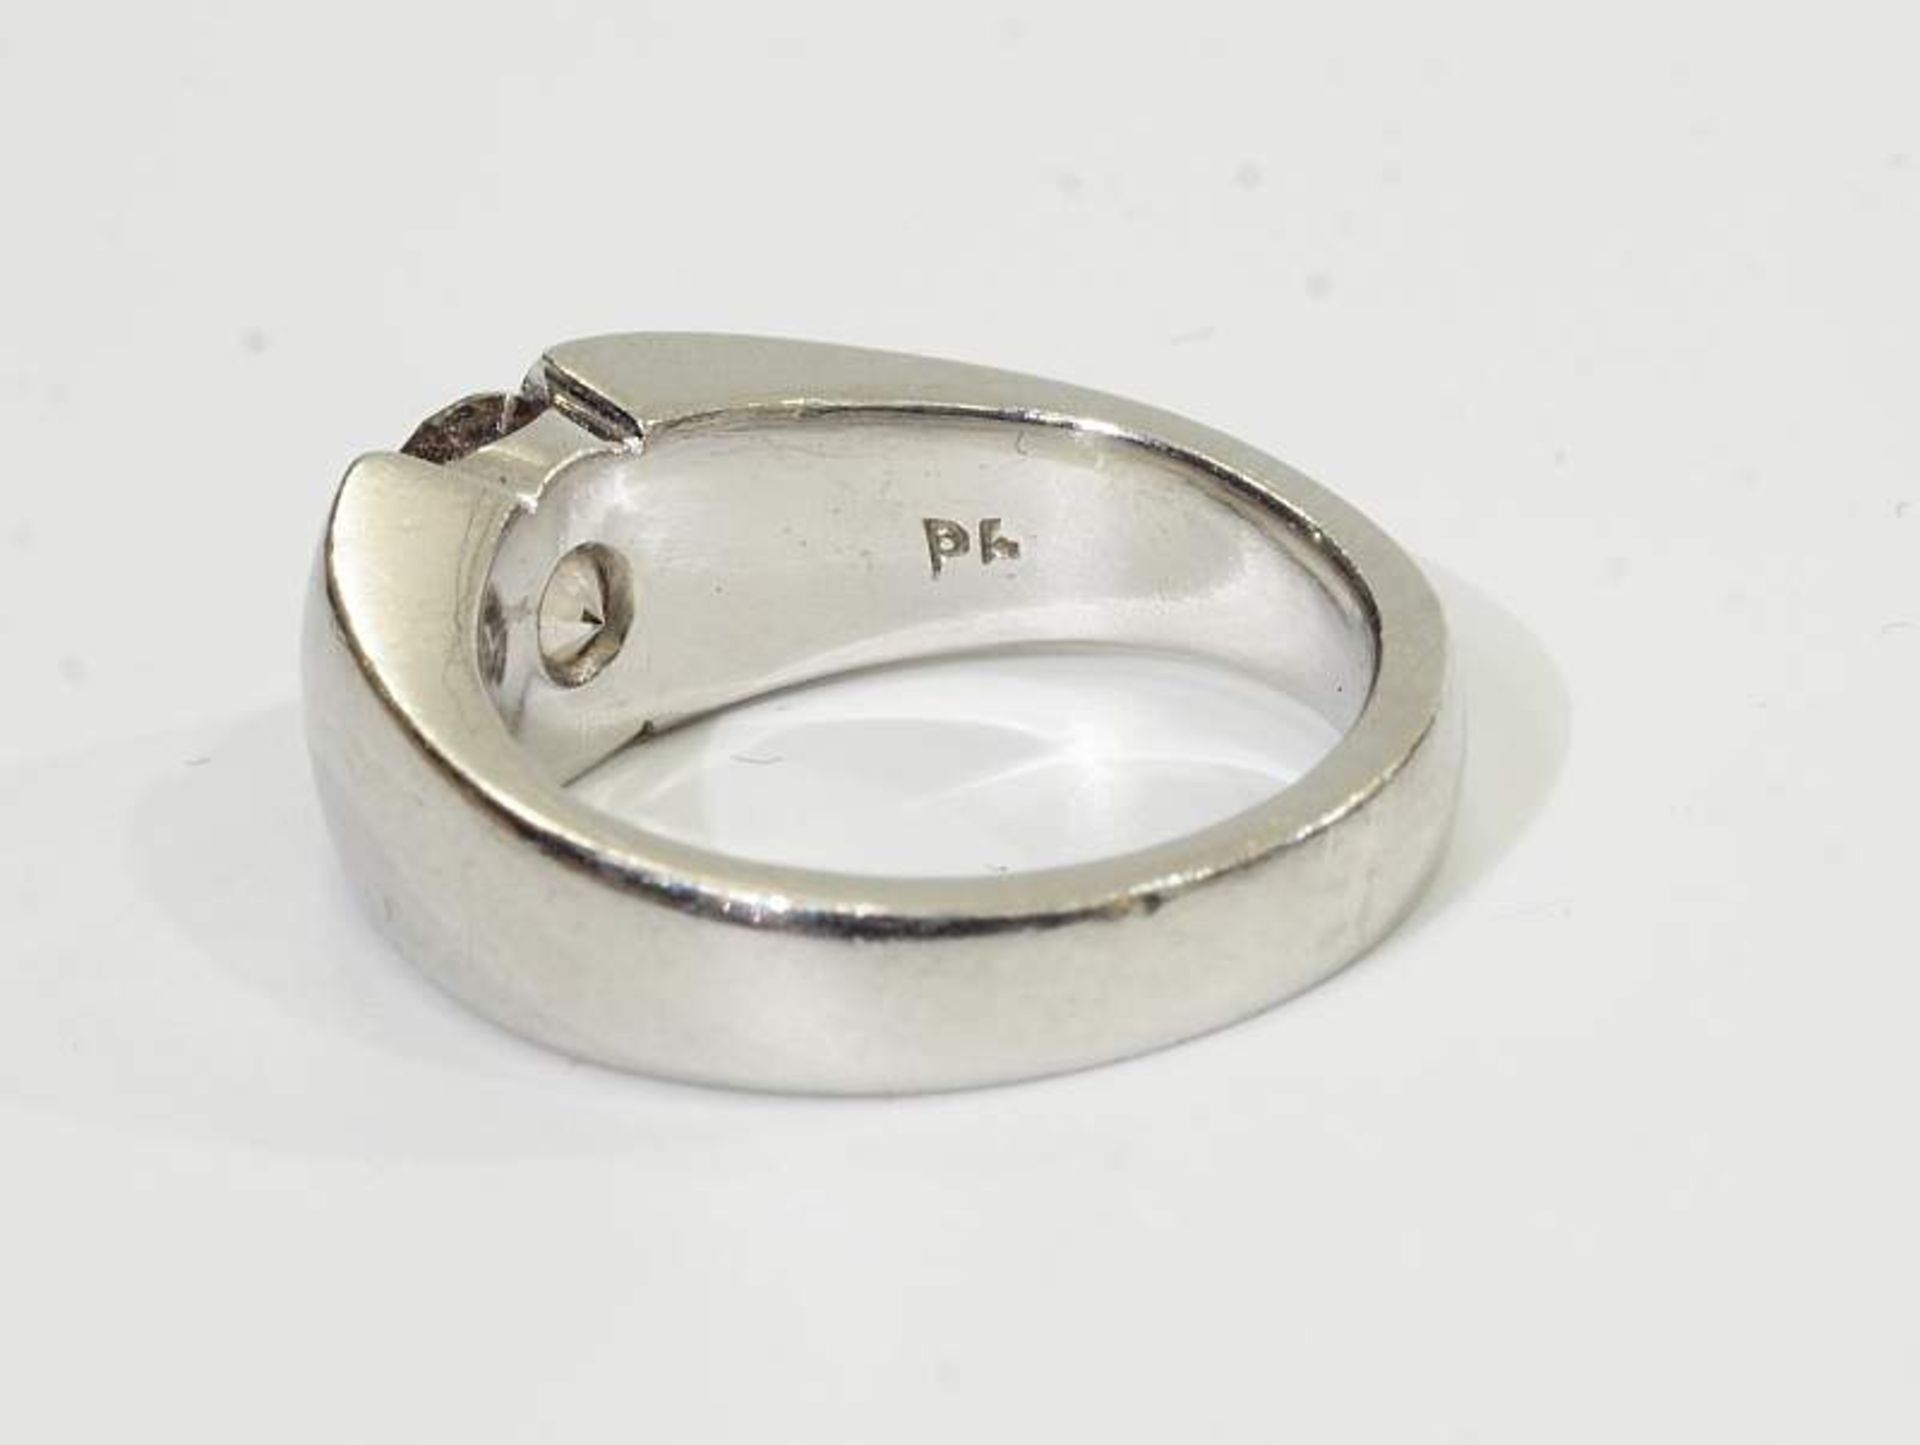 Platin-Brillant-Ring. Platin-Brillant-Ring, Mittig Brillant 1,56 ct/si, Farbe champagner. Kauf- - Bild 3 aus 6